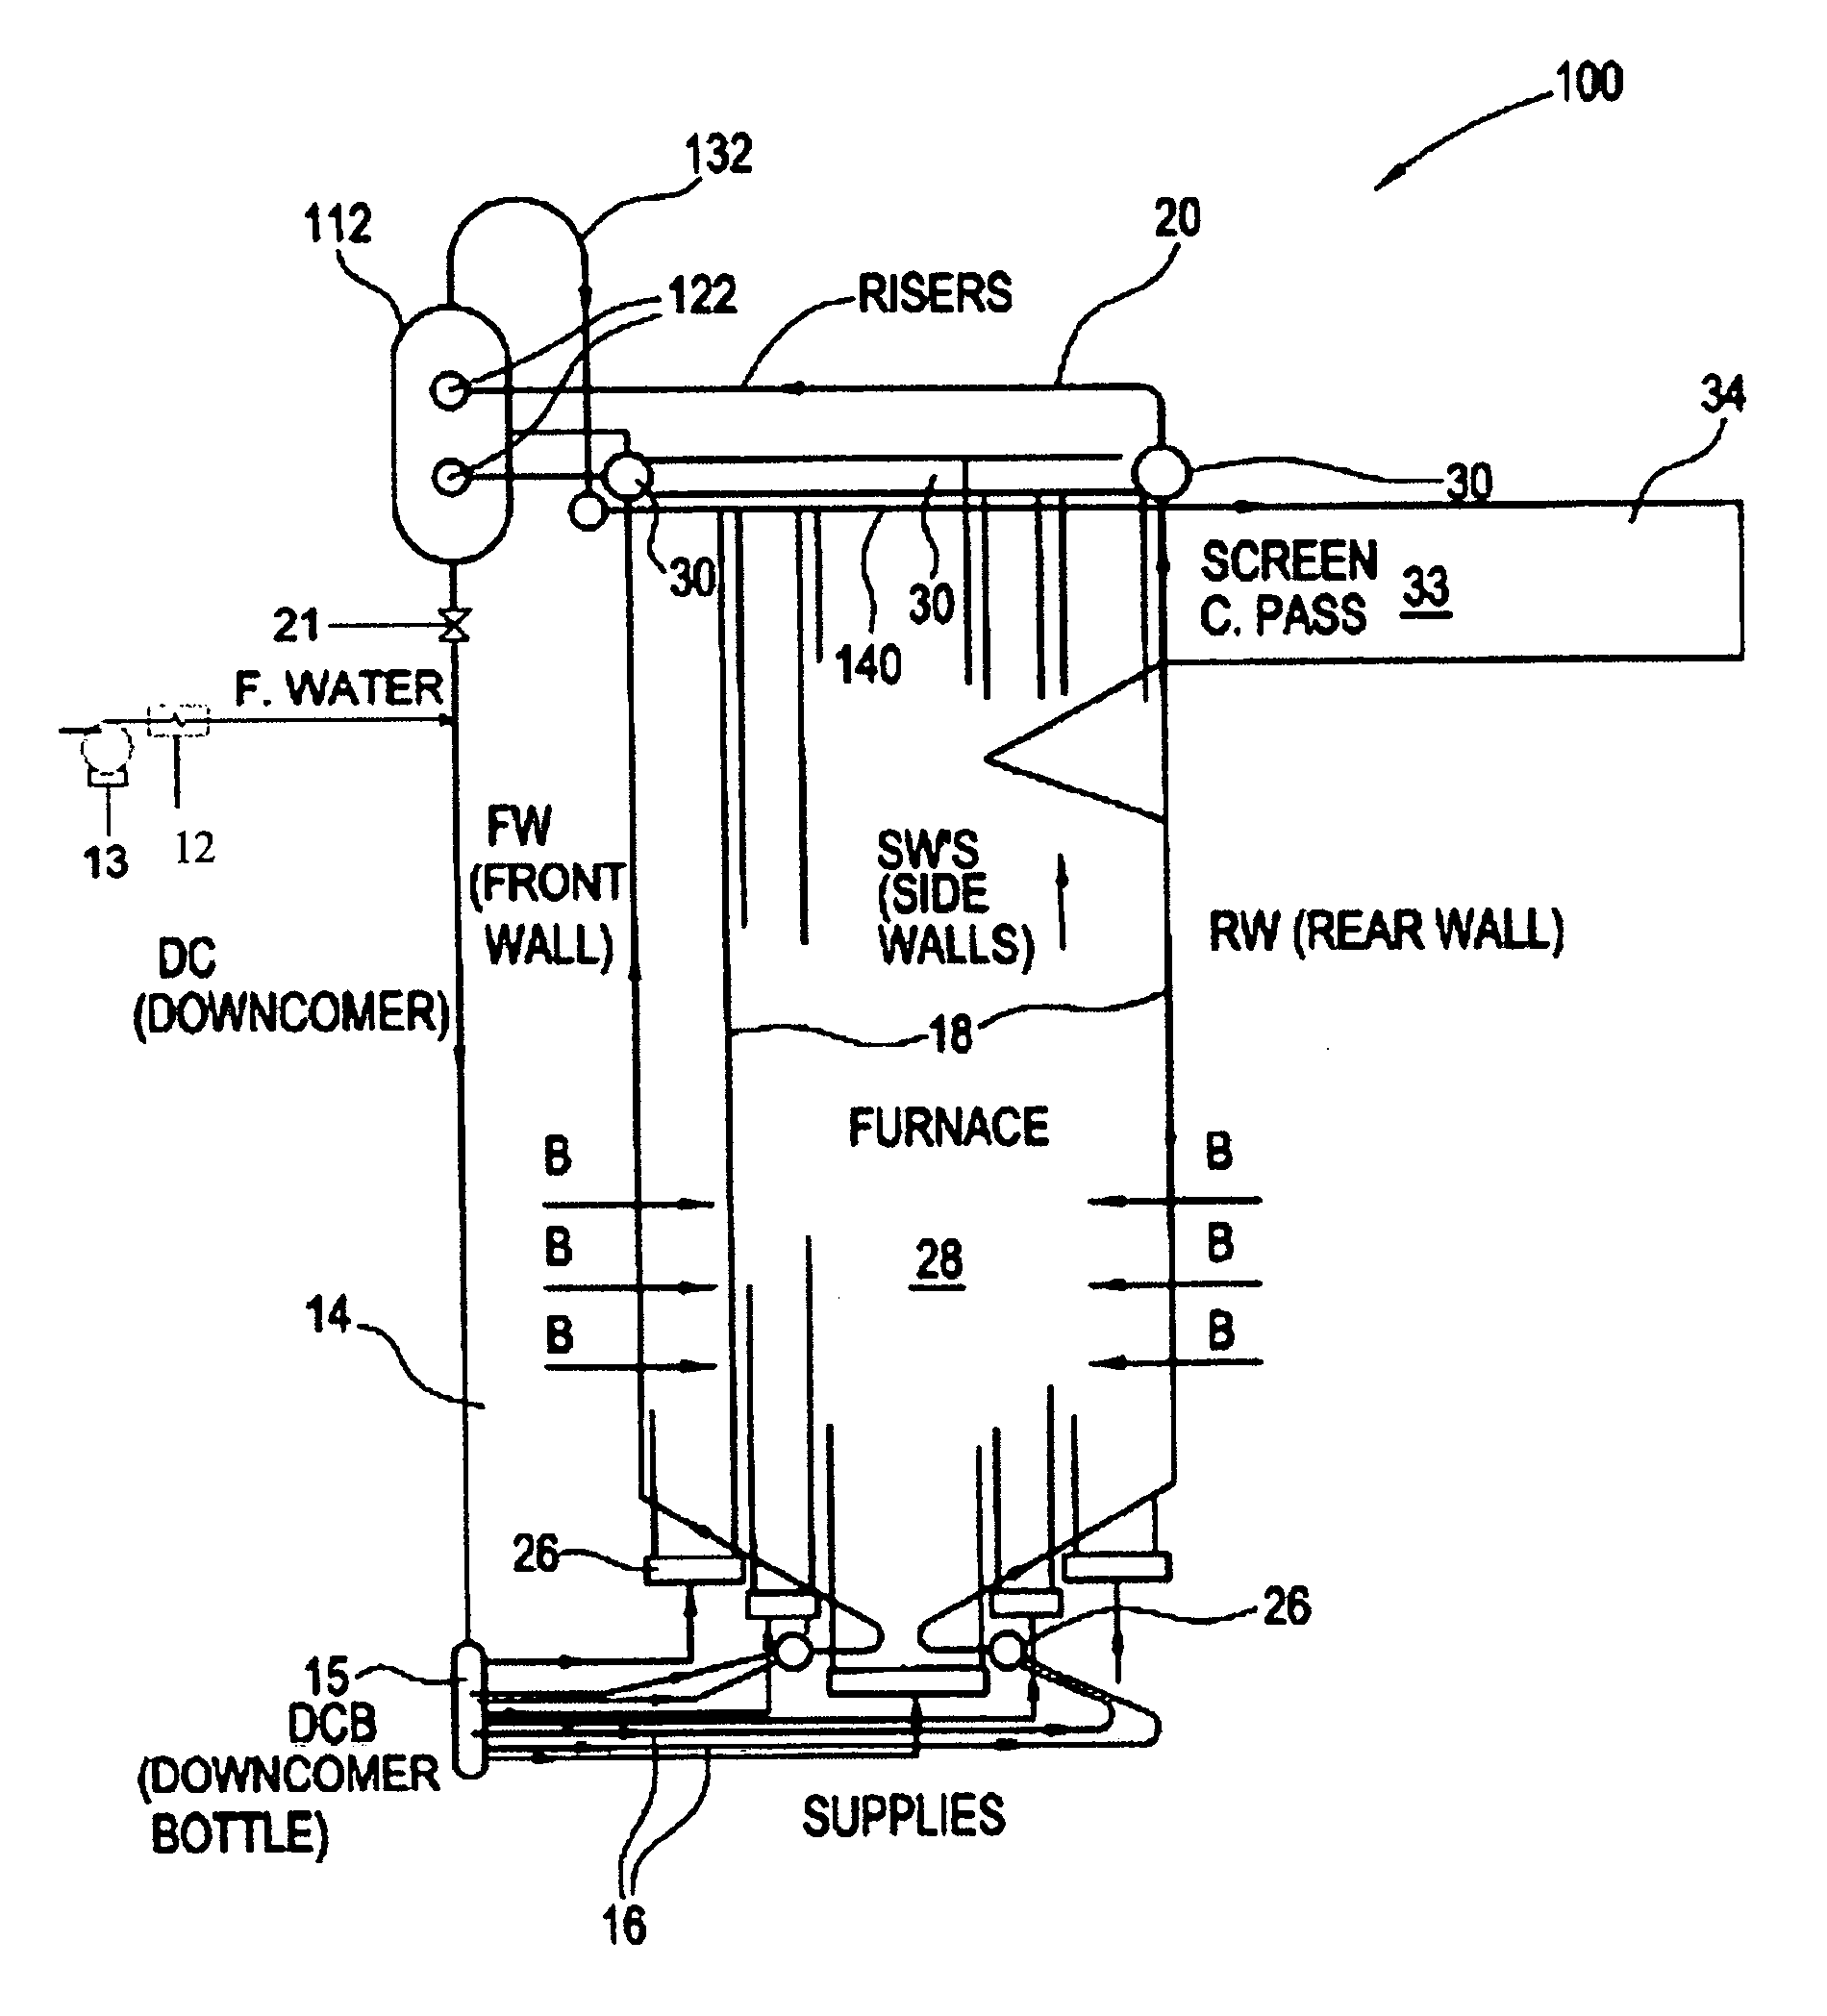 Circulation system for sliding pressure steam generator